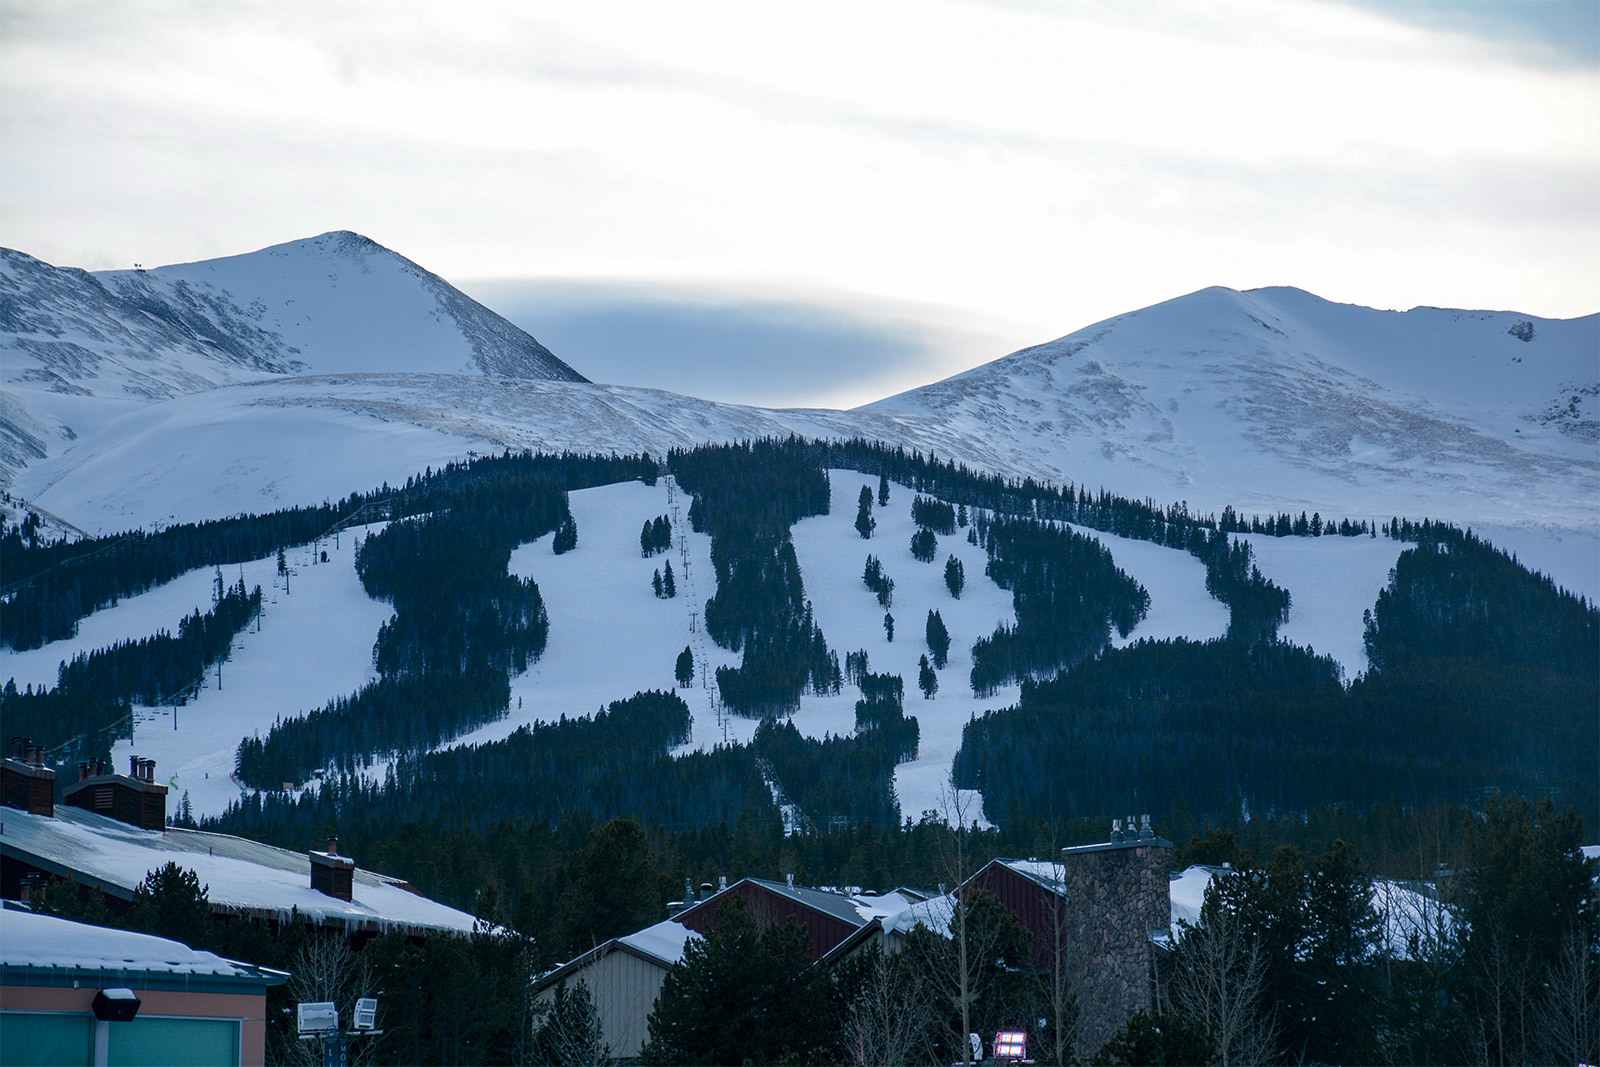 View from the Eagle Subdivision of the Breckenridge Ski Resort